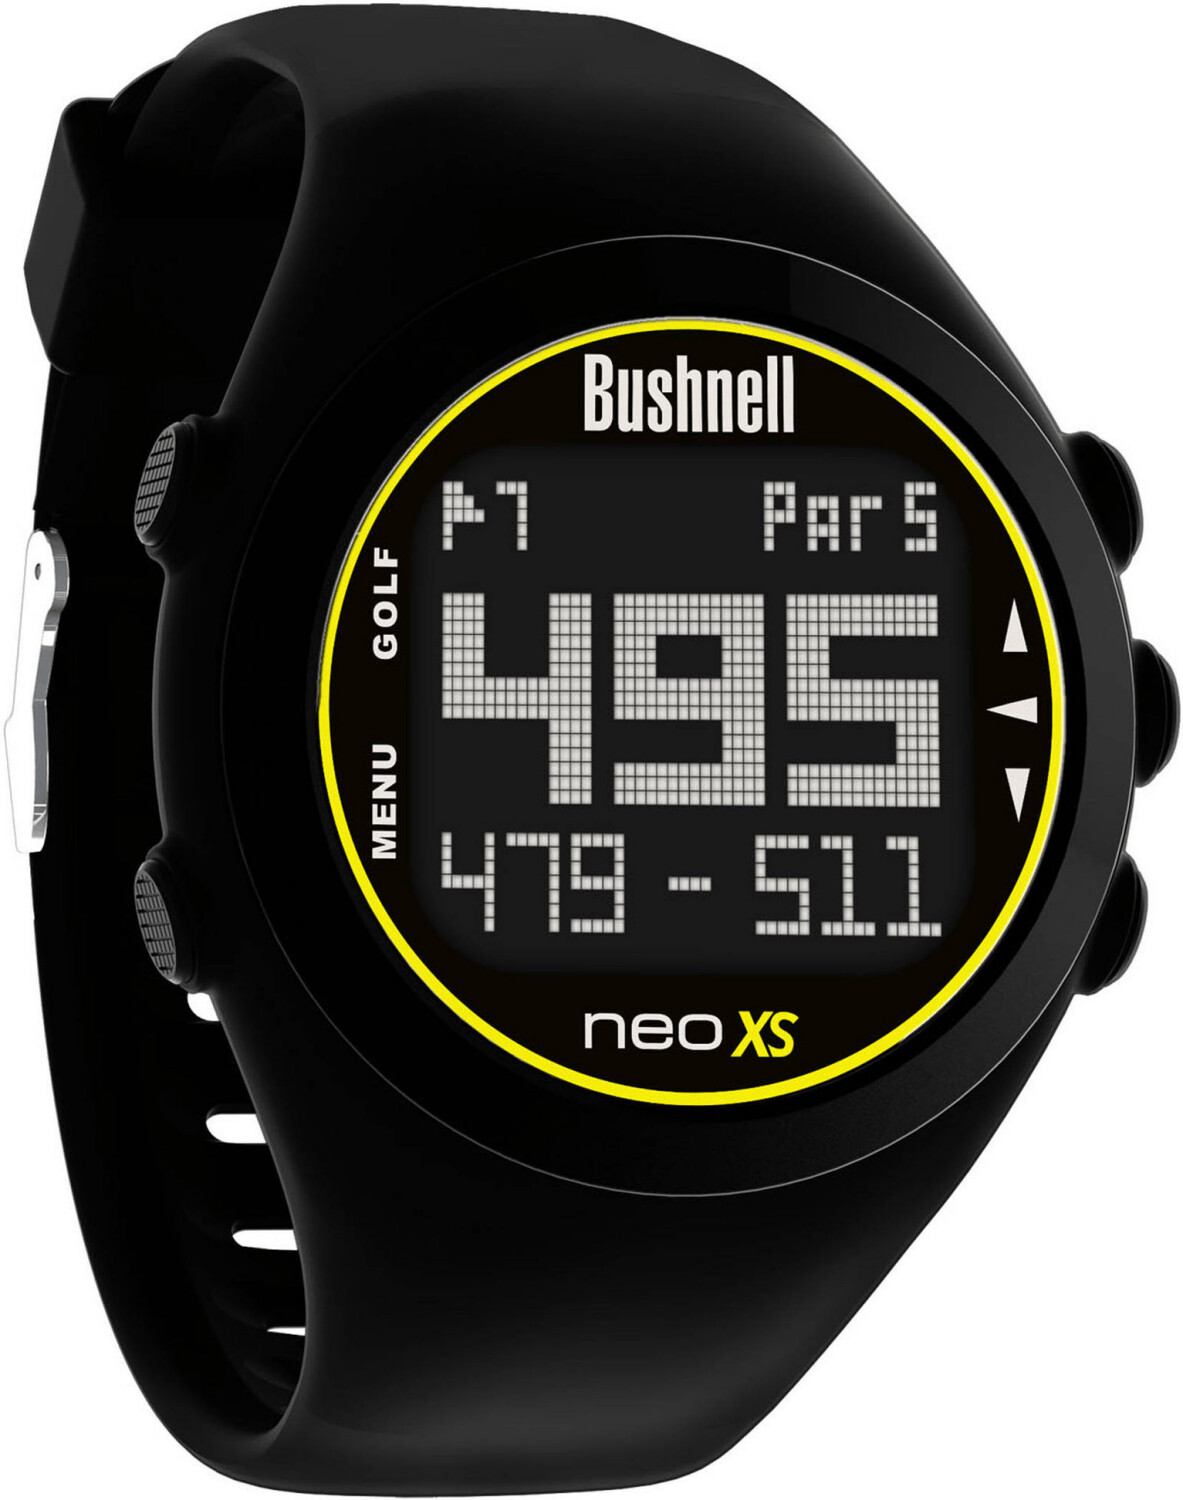 Bushnell Neo XS GPS black yellow